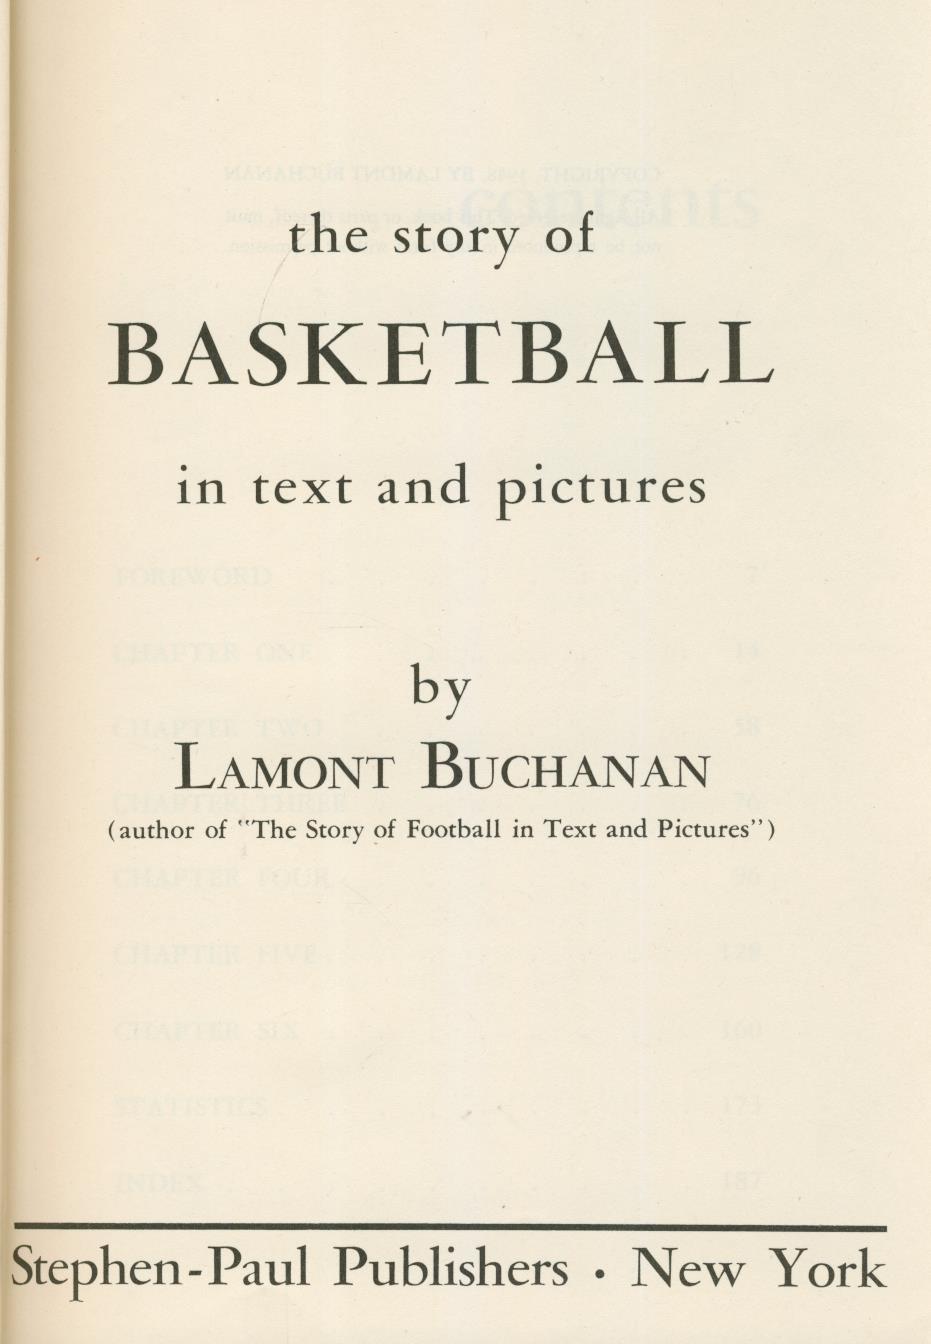 basketball story essay